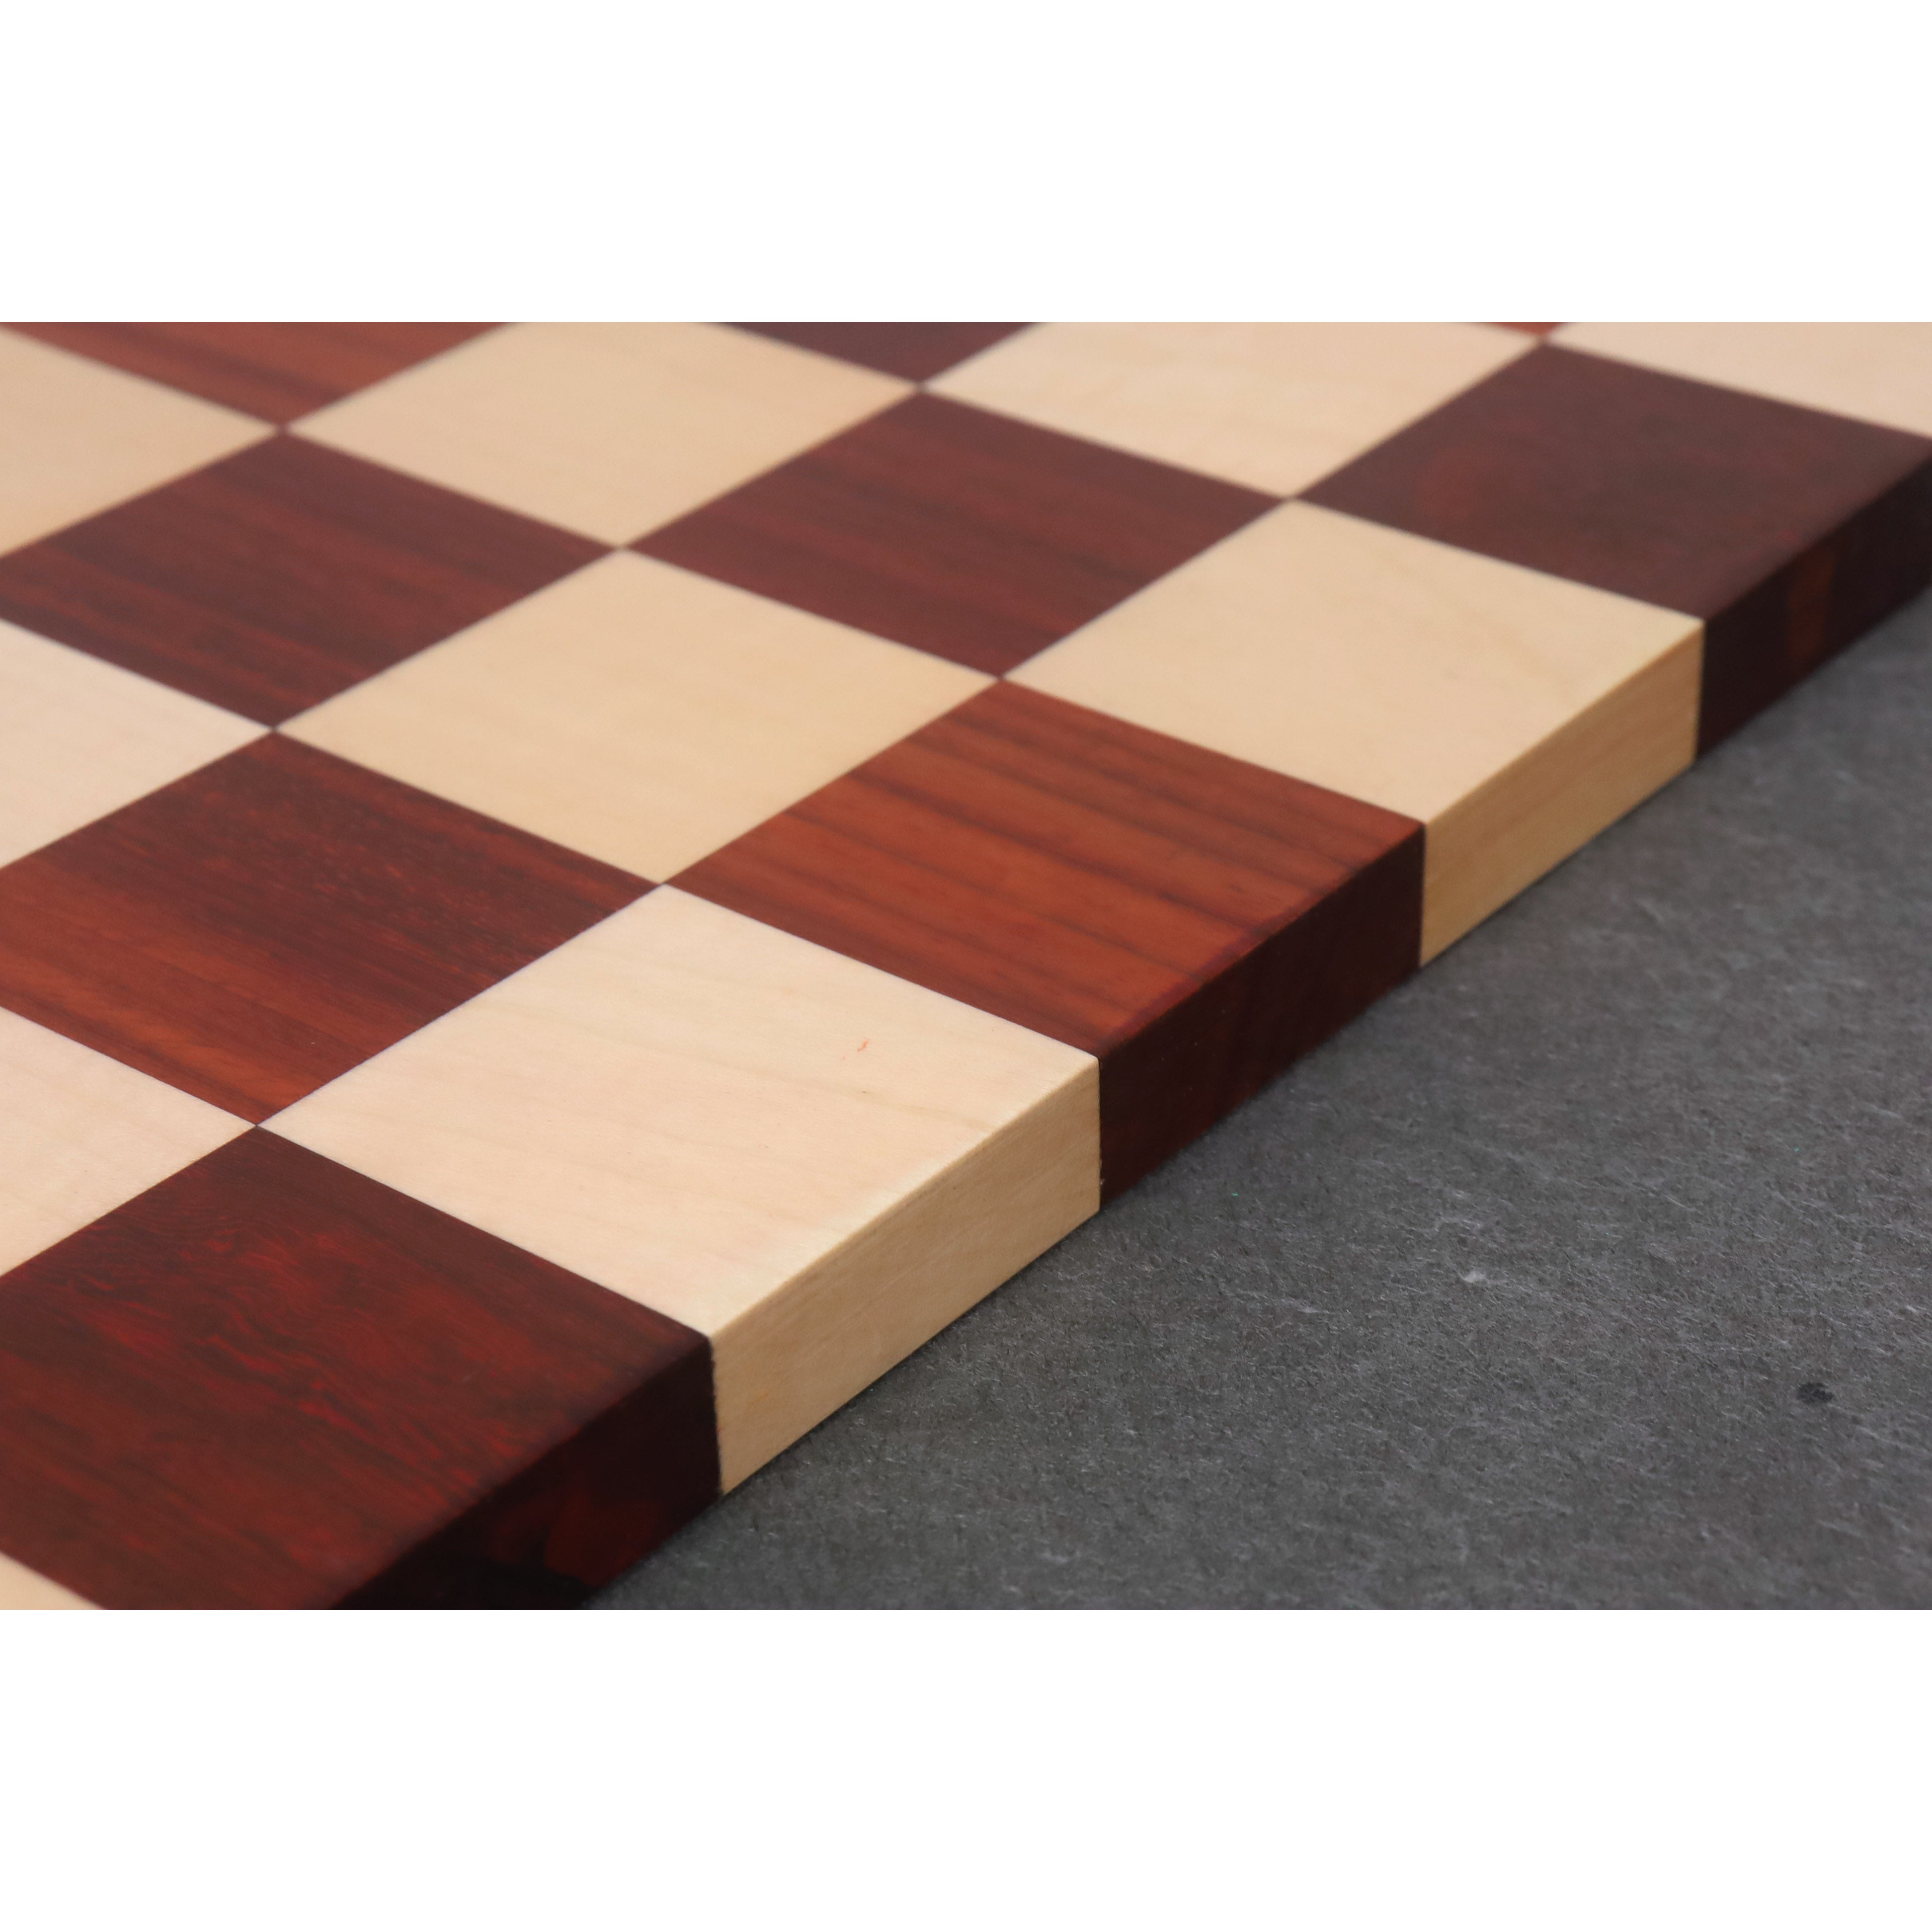 Borderless Hardwood End Grain Chess board